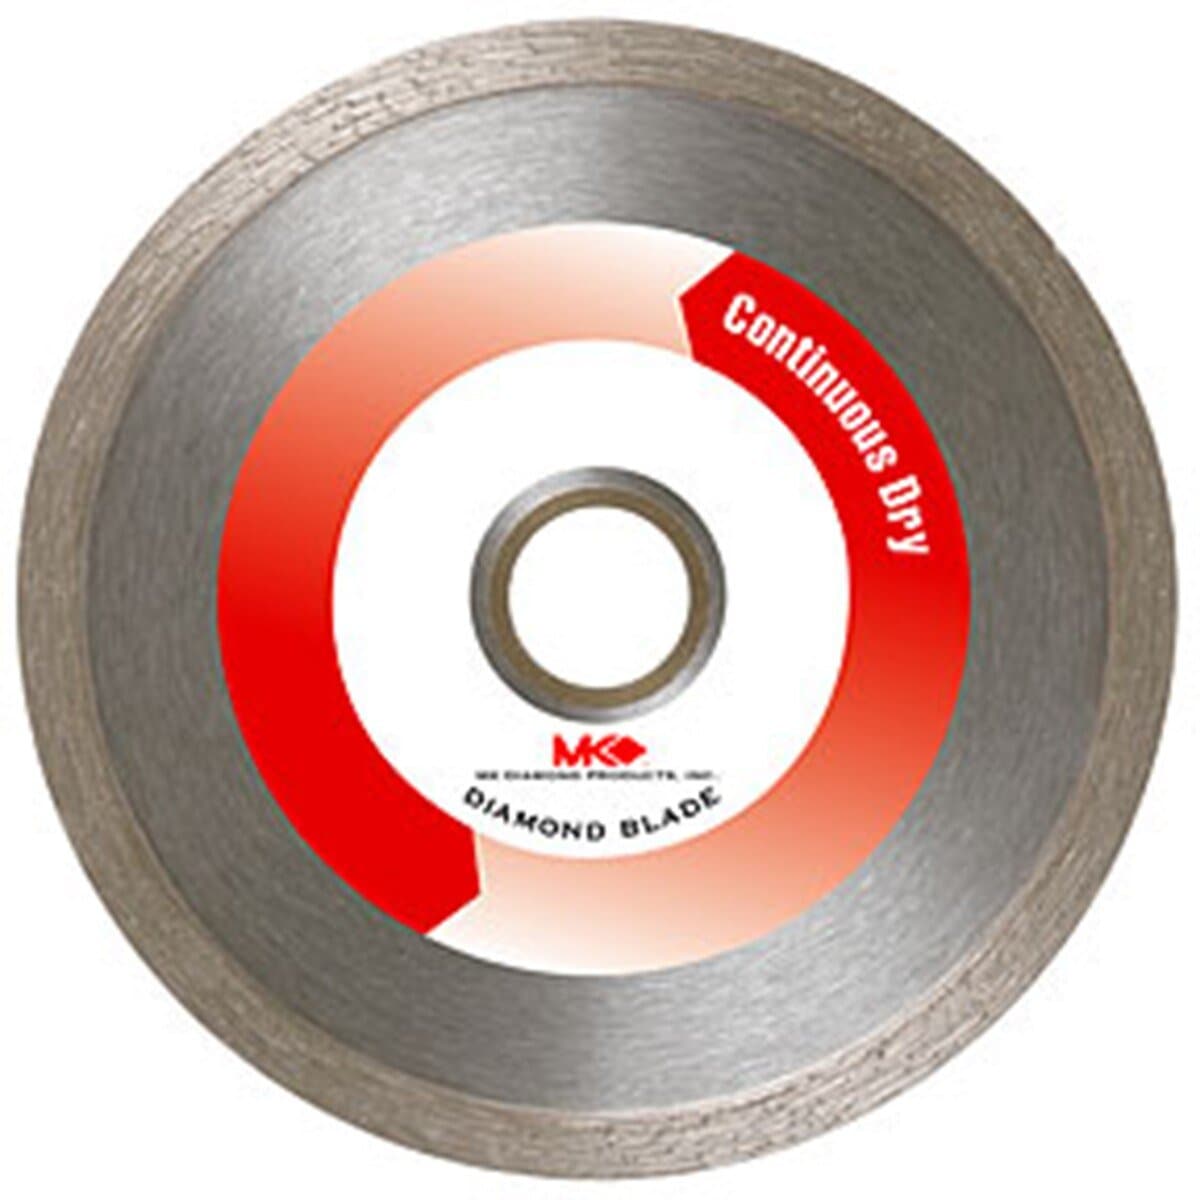 MK-404CR Hard Materials Dry Cutting Blade (Supreme) - MK Diamond